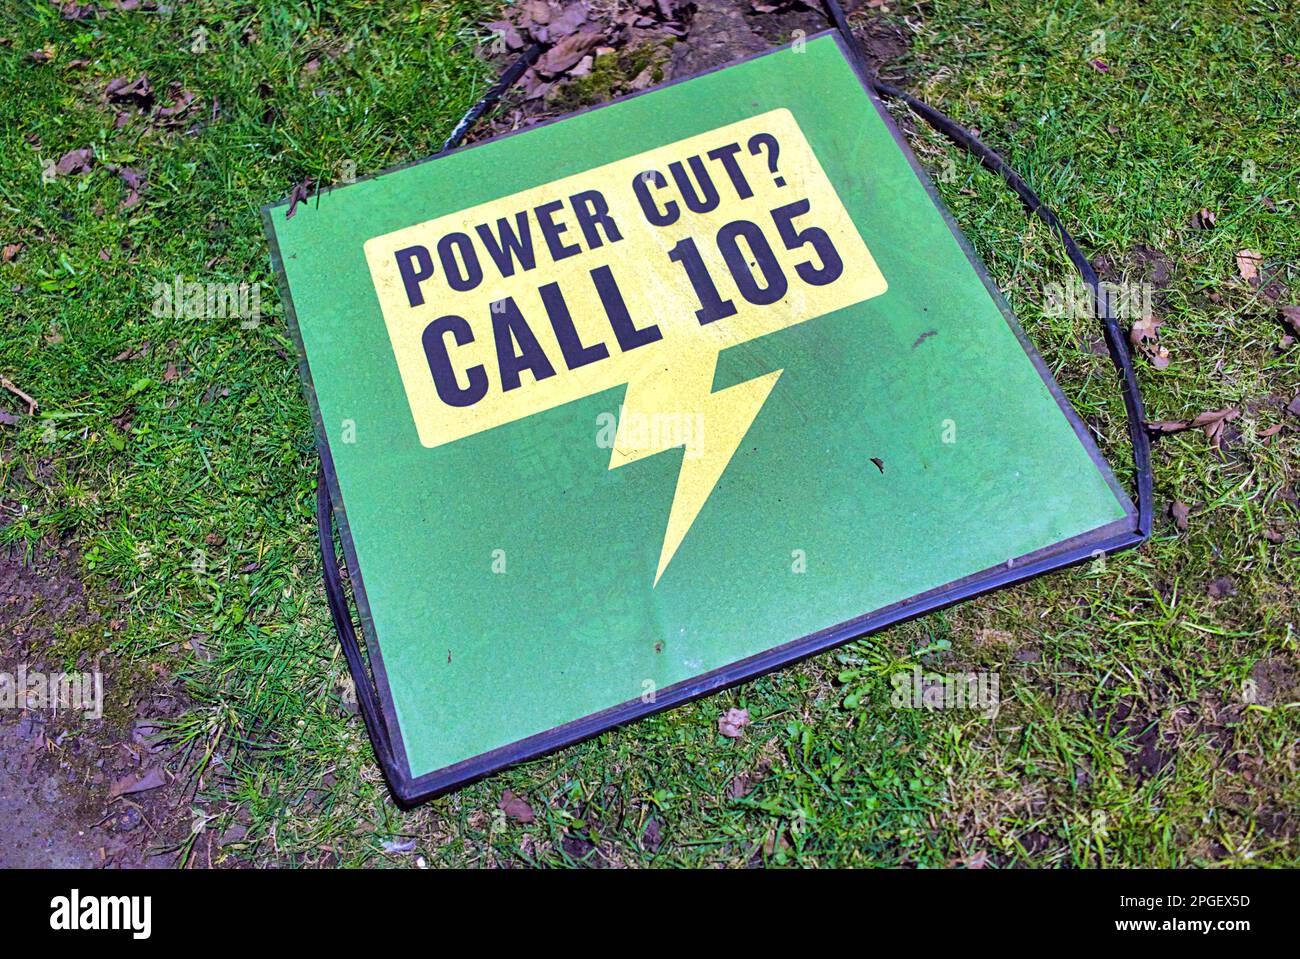 power cut call 105 sign Stock Photo